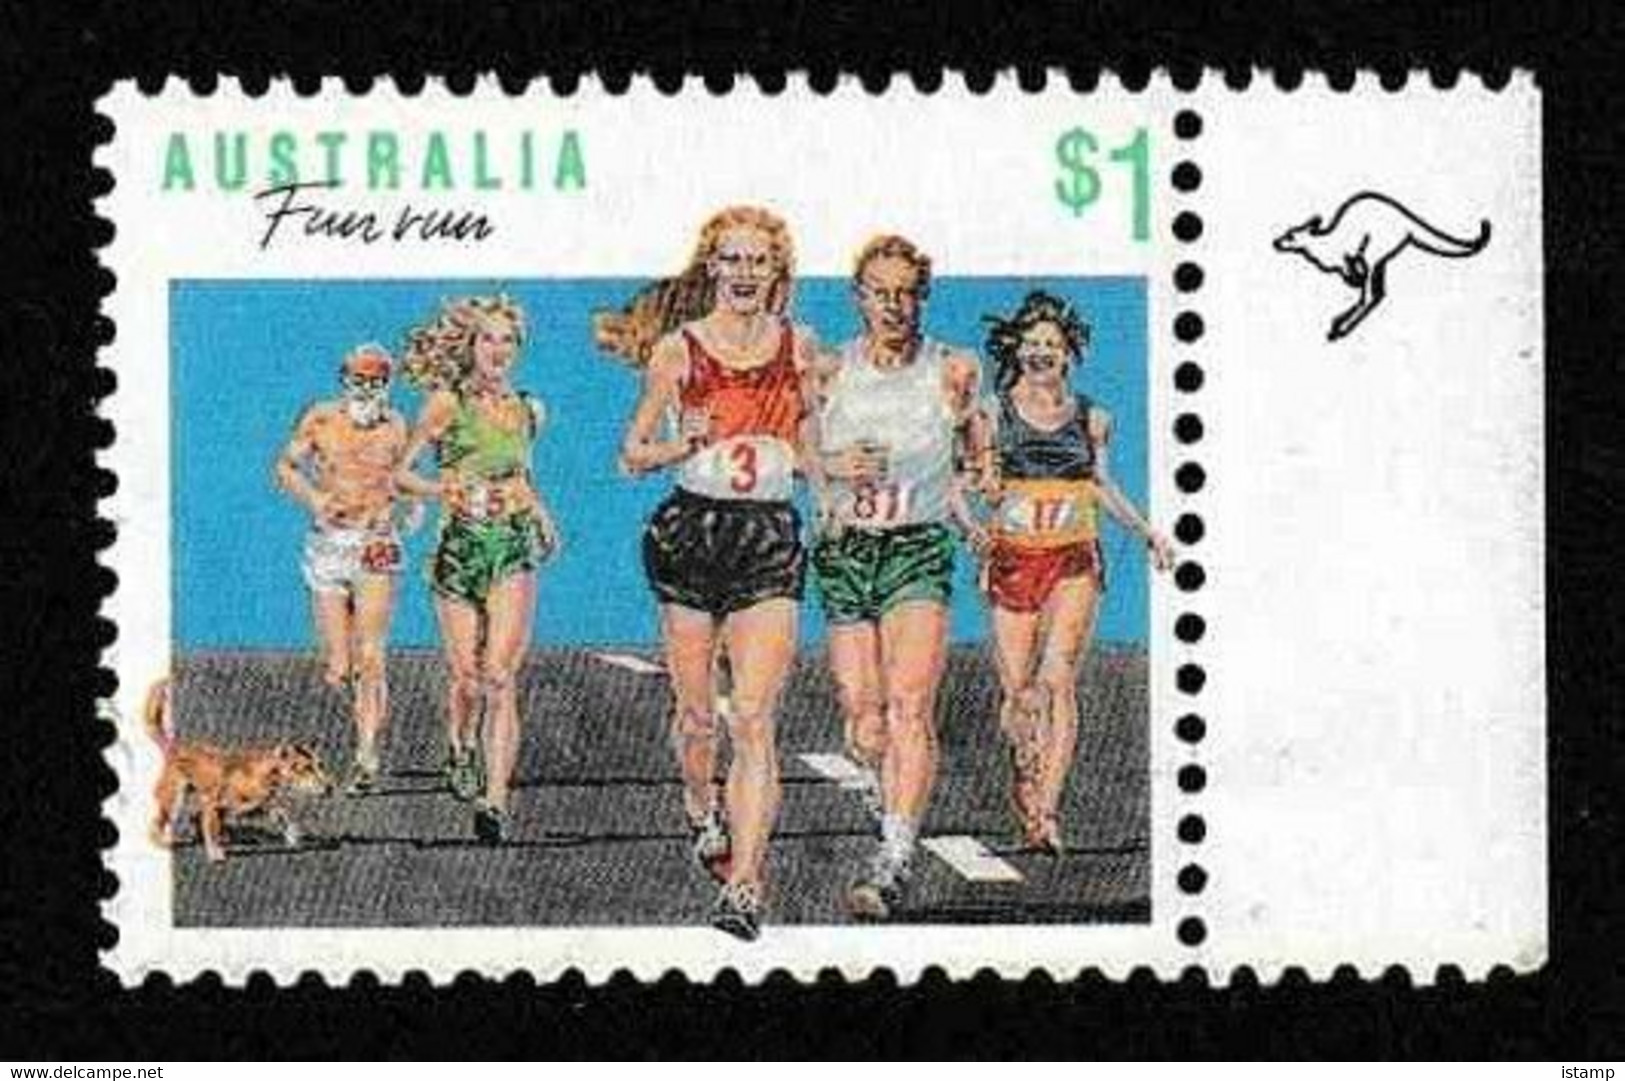 ⭕1990 - Australia SPORTS Series FUN RUNS (5th Reprint - Kangaroo) - $1 Stamp MNH⭕ - Probe- Und Nachdrucke